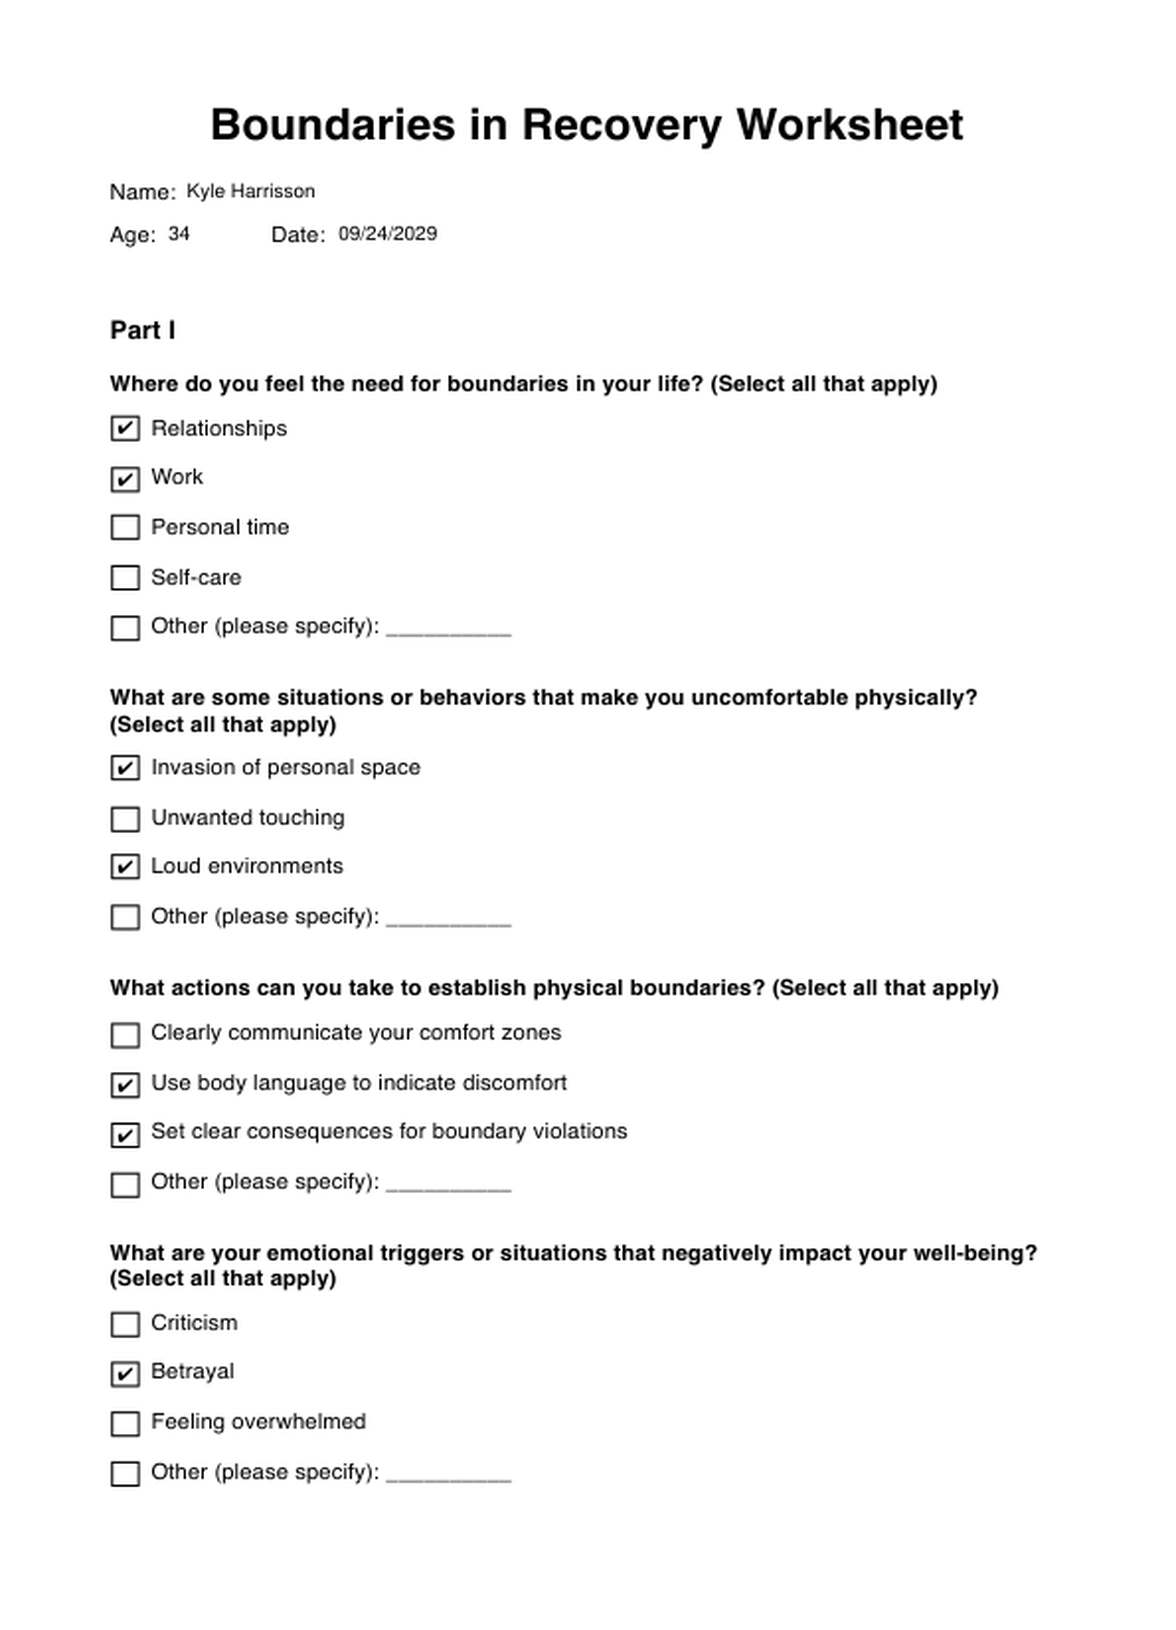 Boundaries in Recovery Worksheet PDF Example